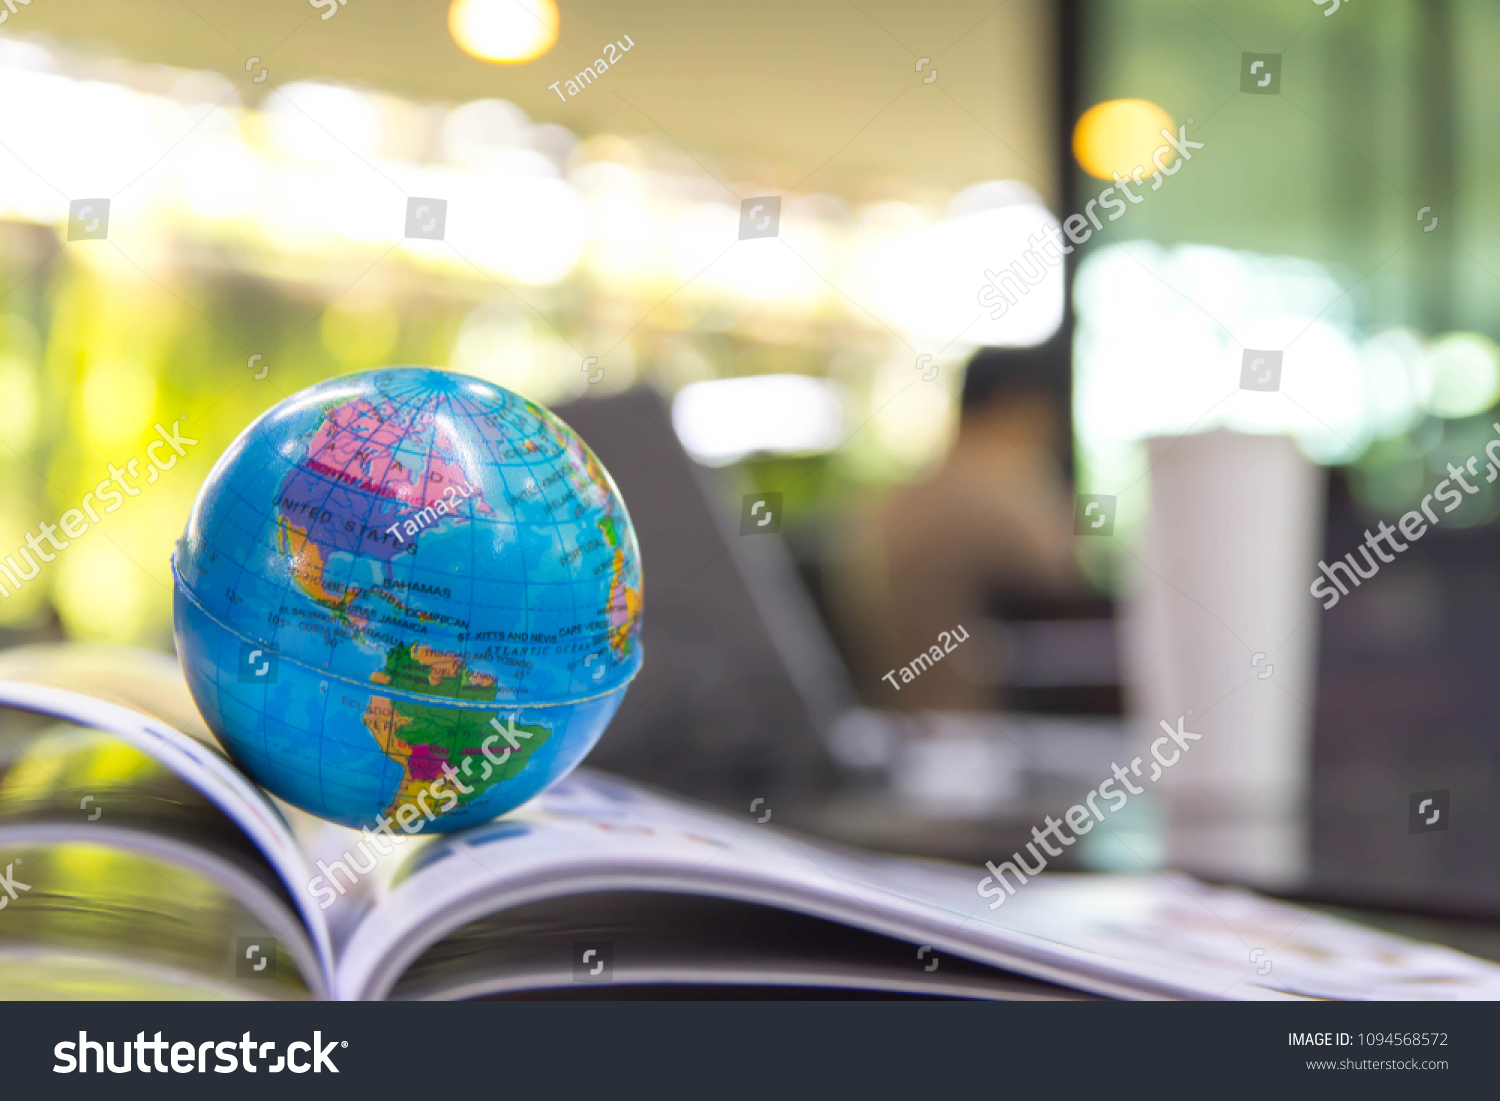 World globe on text book.
Graduate study abroad programs.    
International education school Concept.  #1094568572